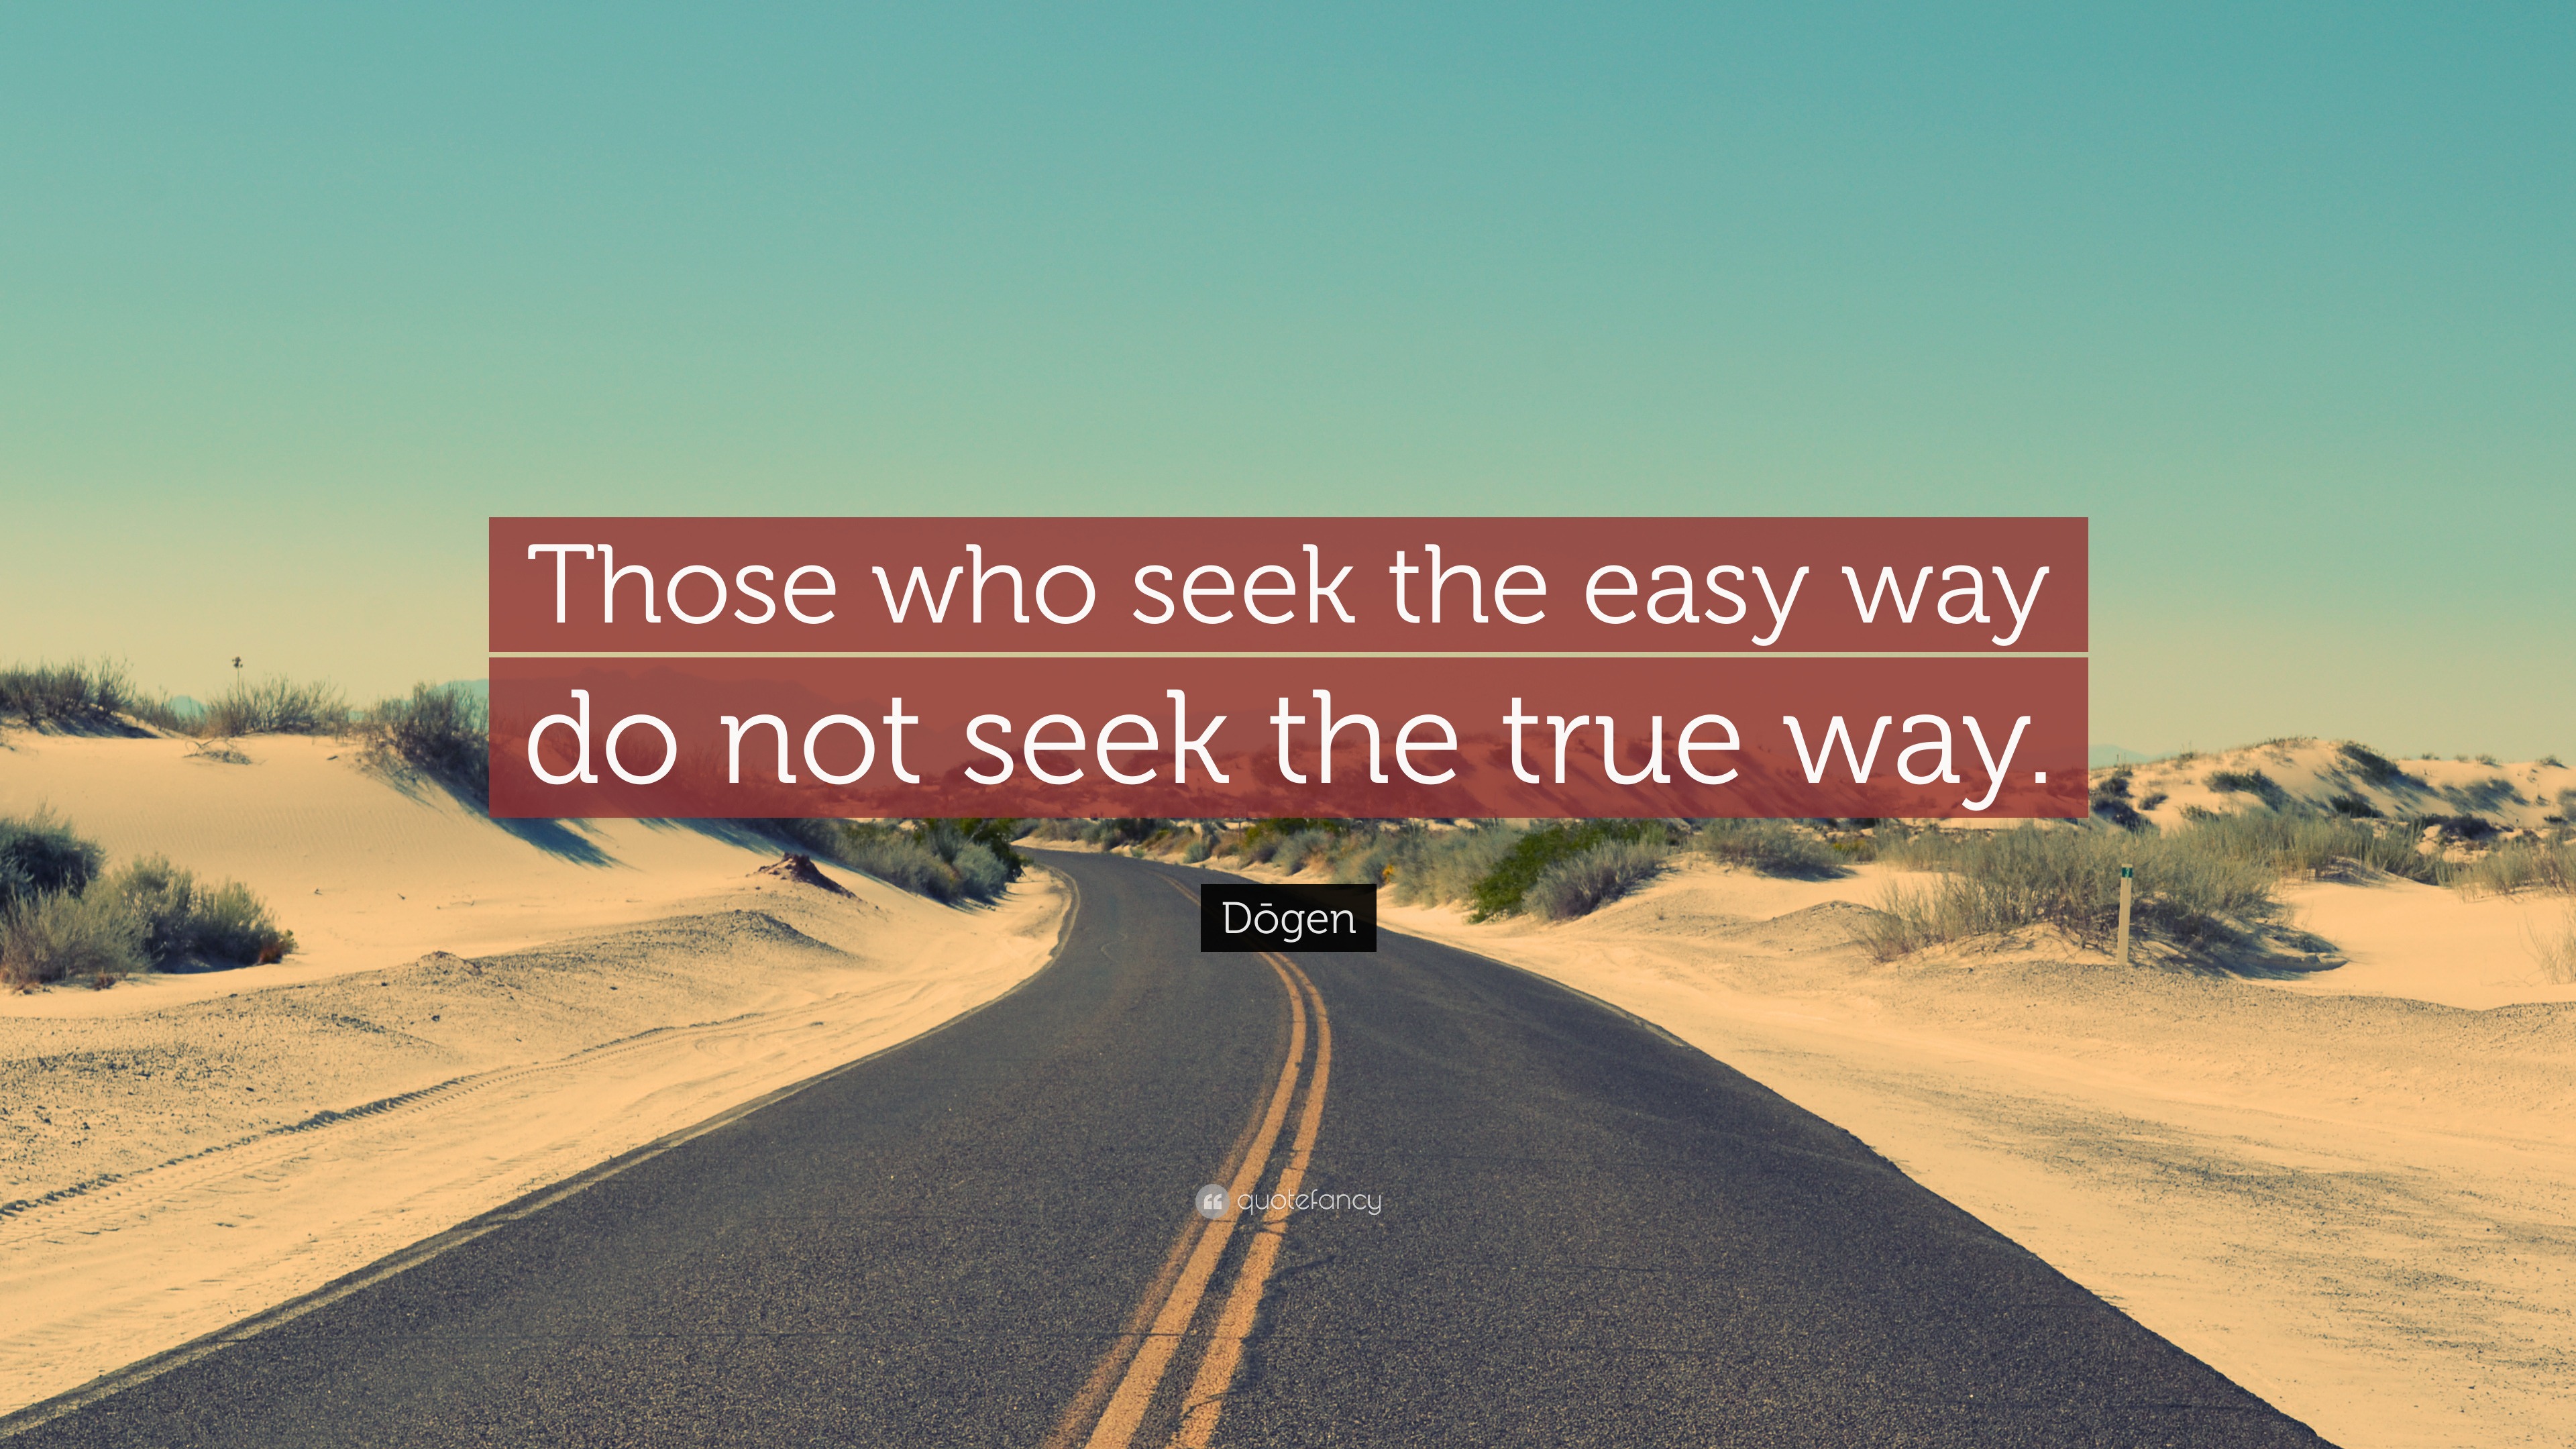 Dōgen Quote: “Those who seek the easy way do not seek the true way.”